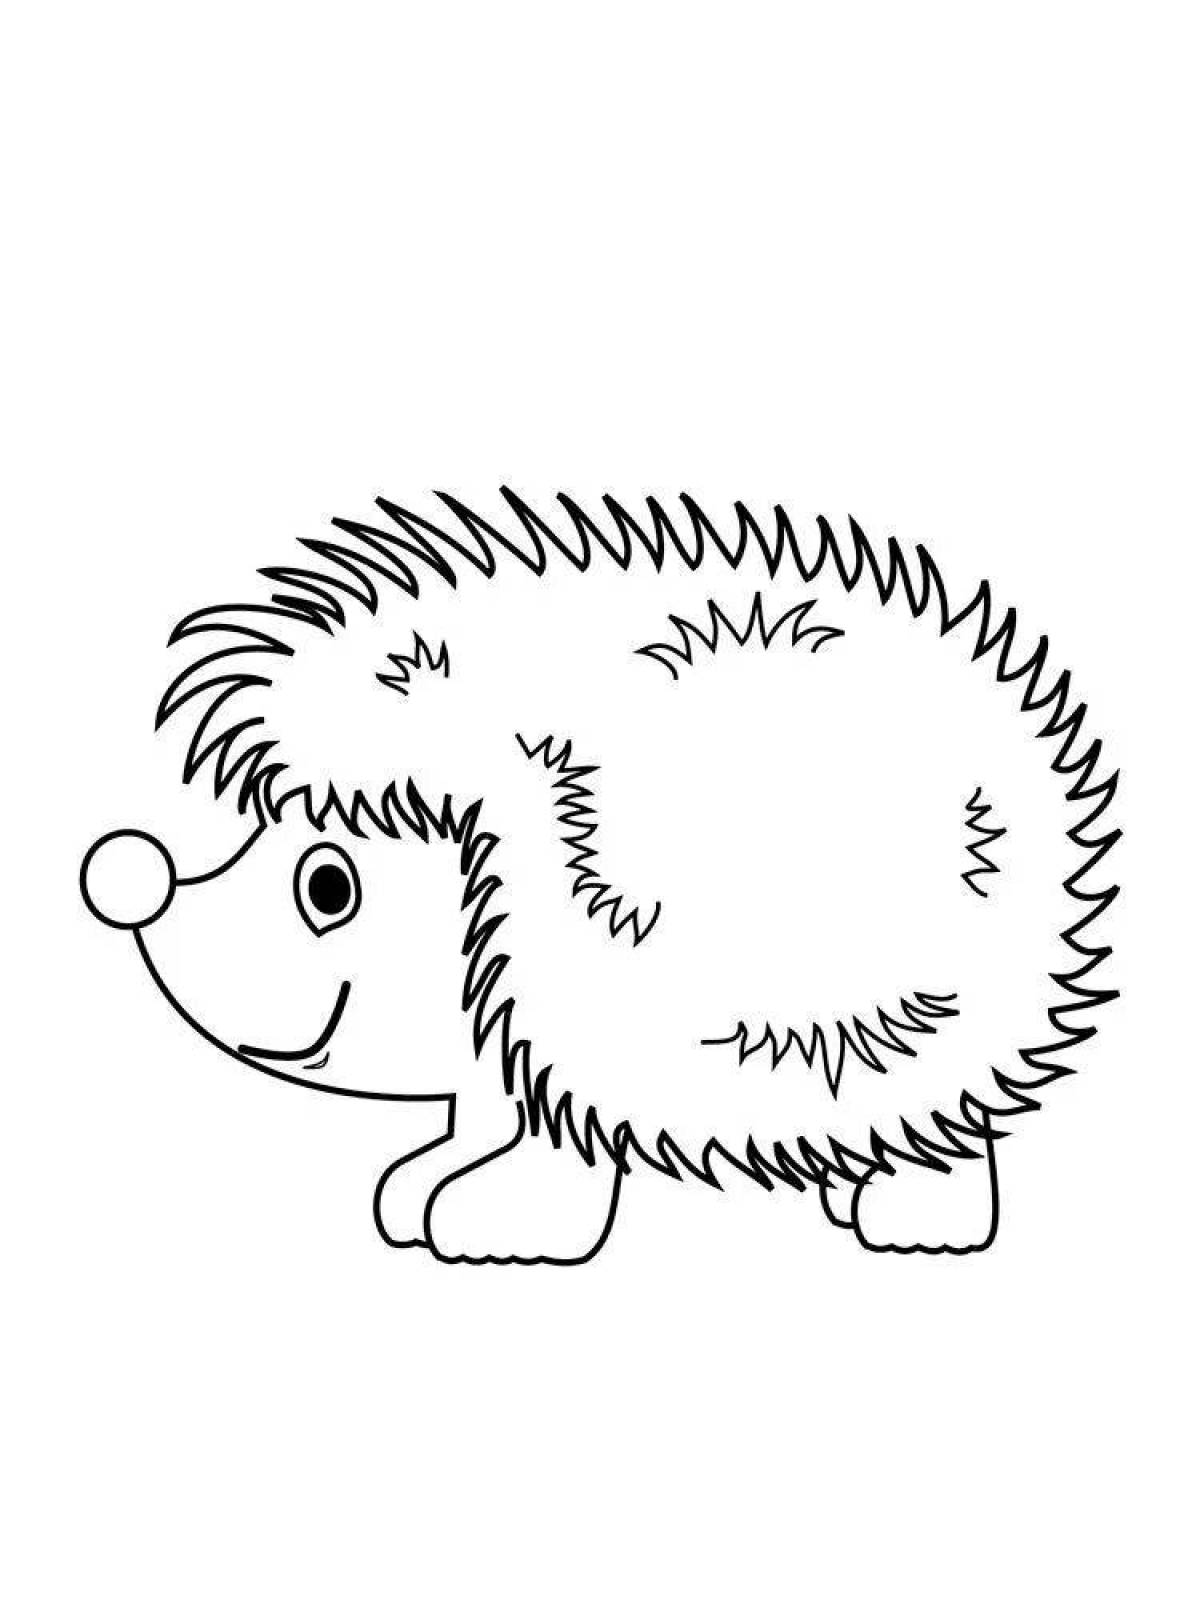 Exuberant hedgehog drawing